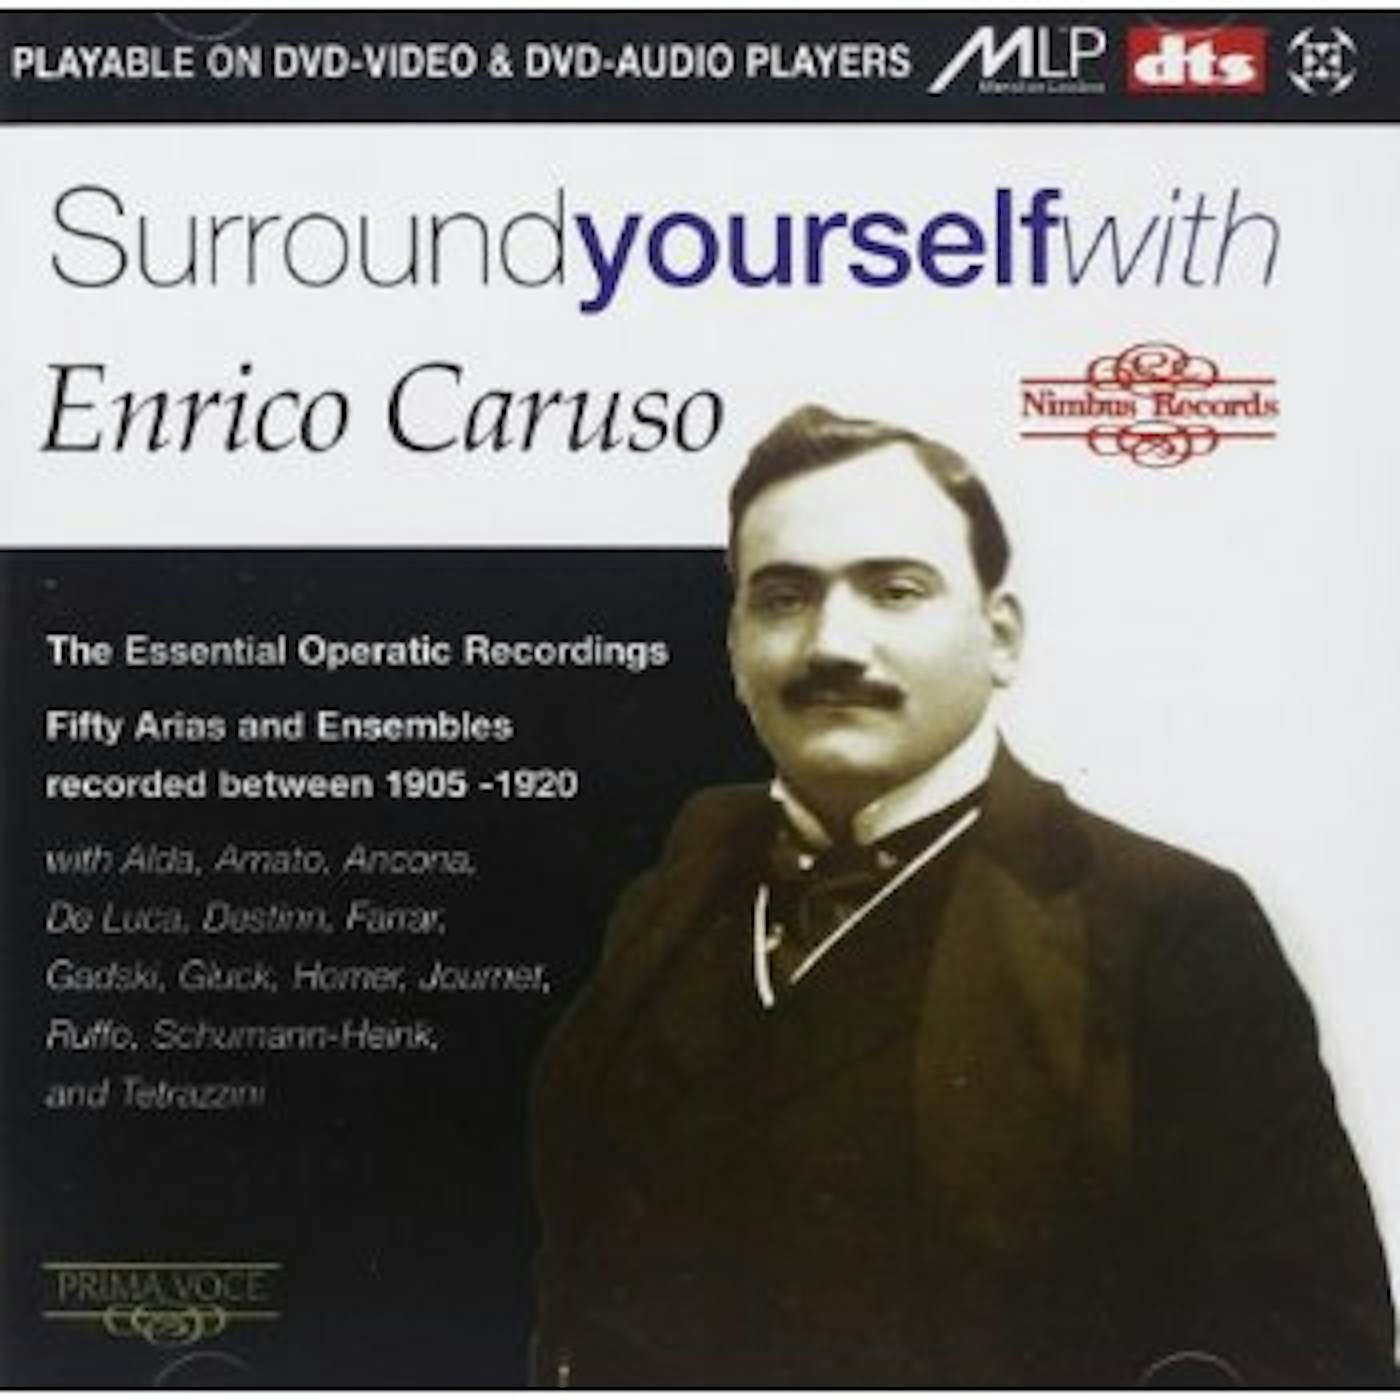 SURROUND YOURSELF WITH ENRICO CARUSO DVD Audio